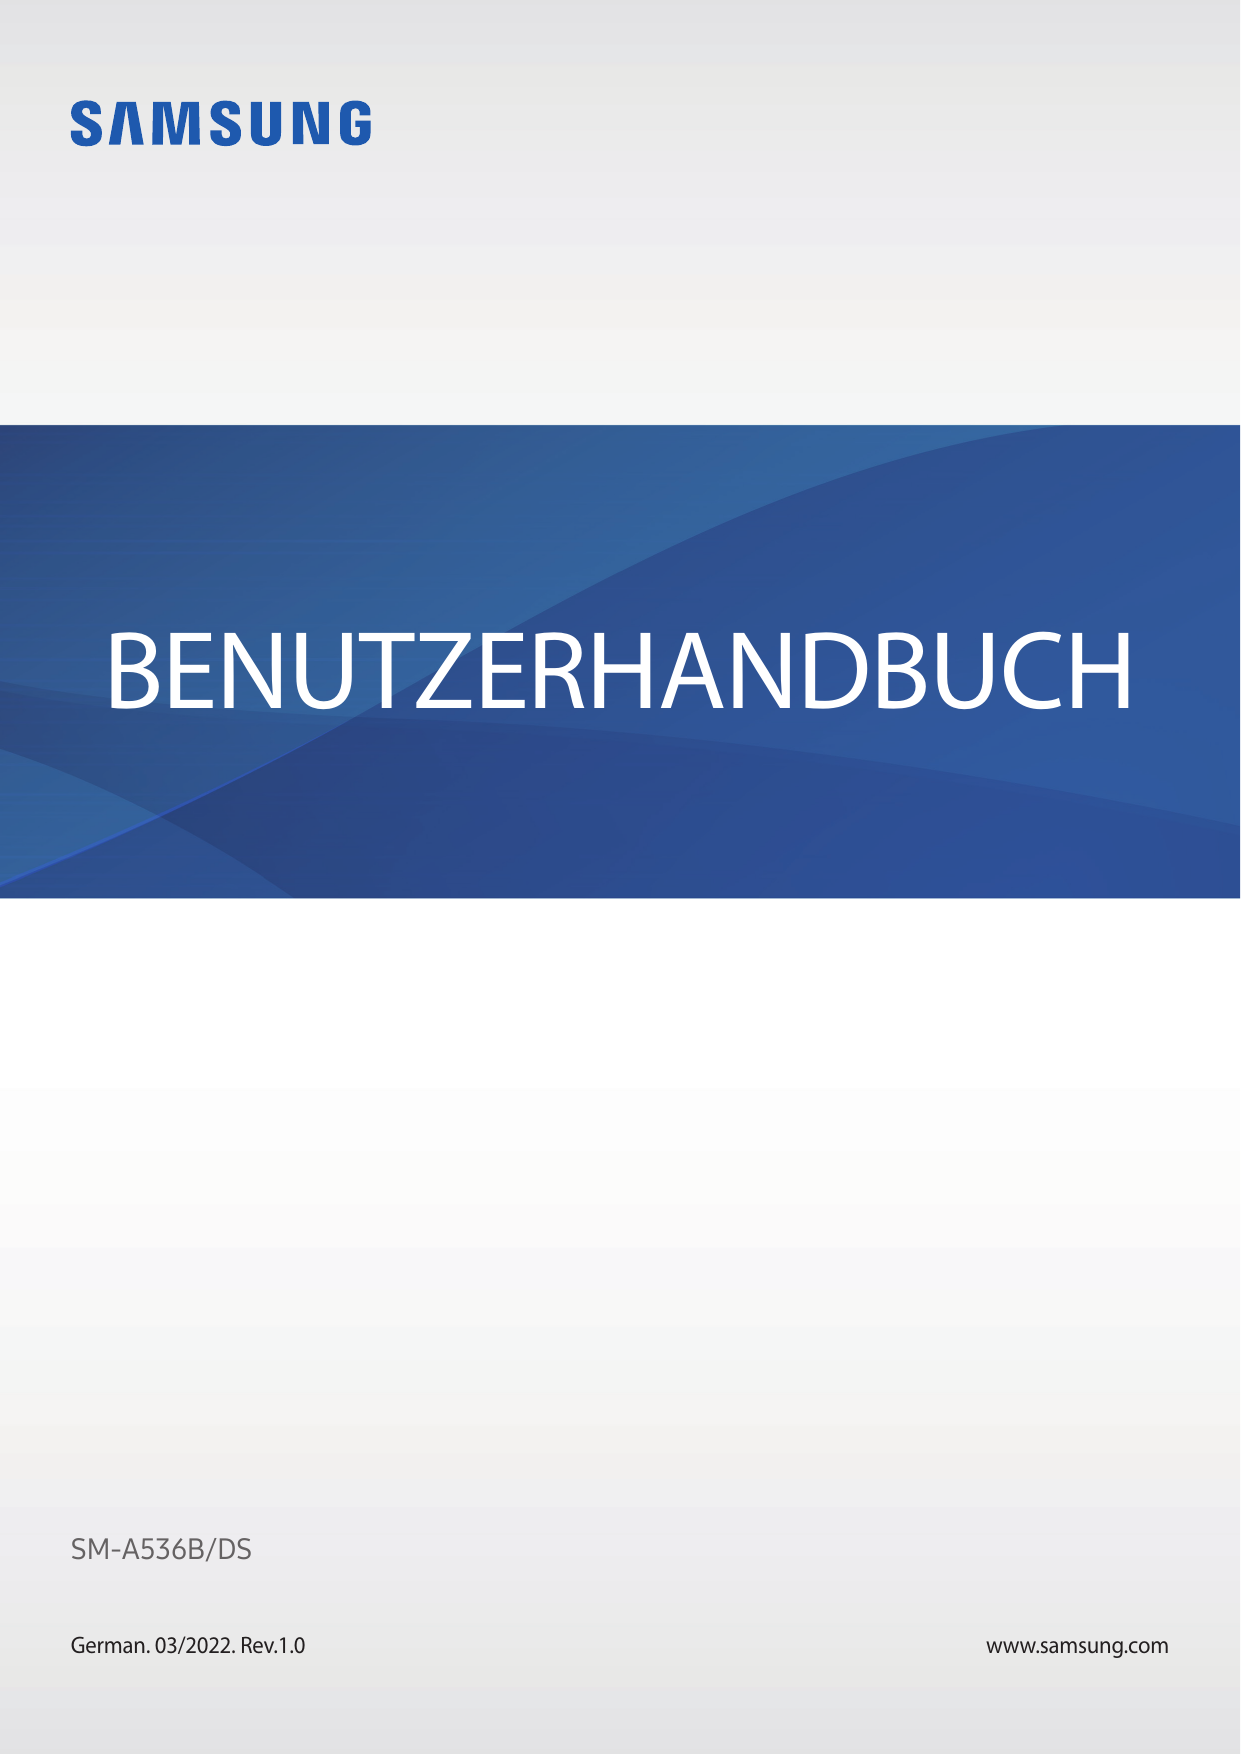 BENUTZERHANDBUCHSM-A536B/DSGerman. 03/2022. Rev.1.0www.samsung.com